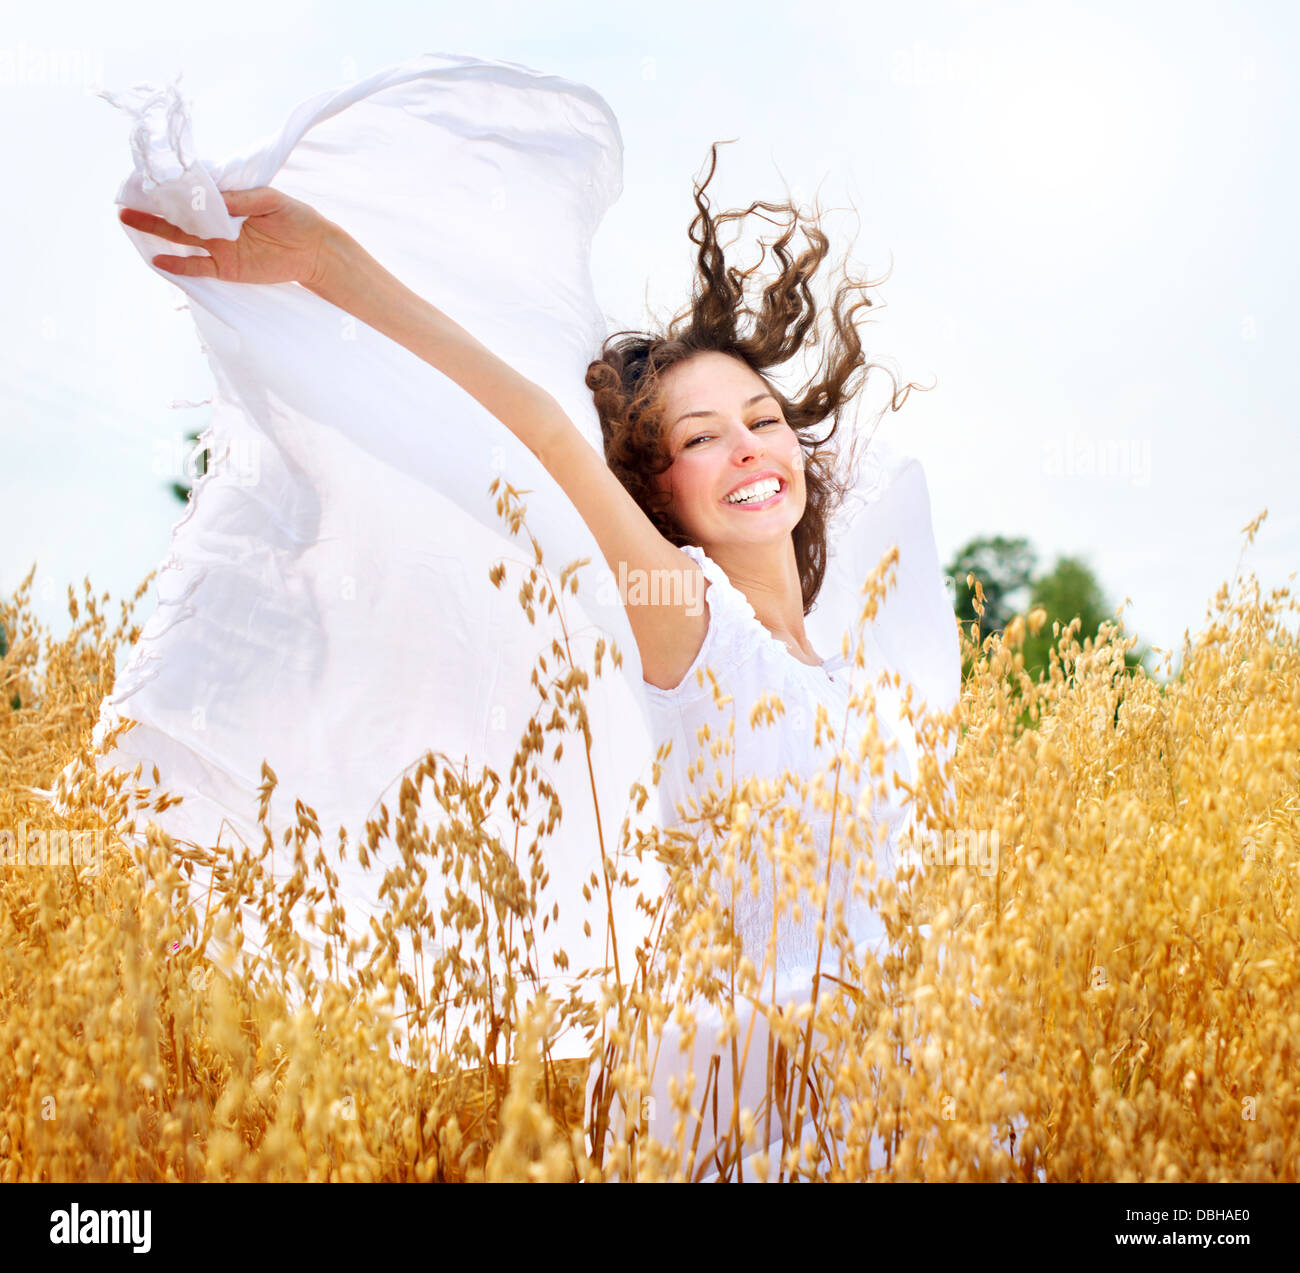 beautiful-happy-girl-on-the-wheat-field-DBHAE0.jpg